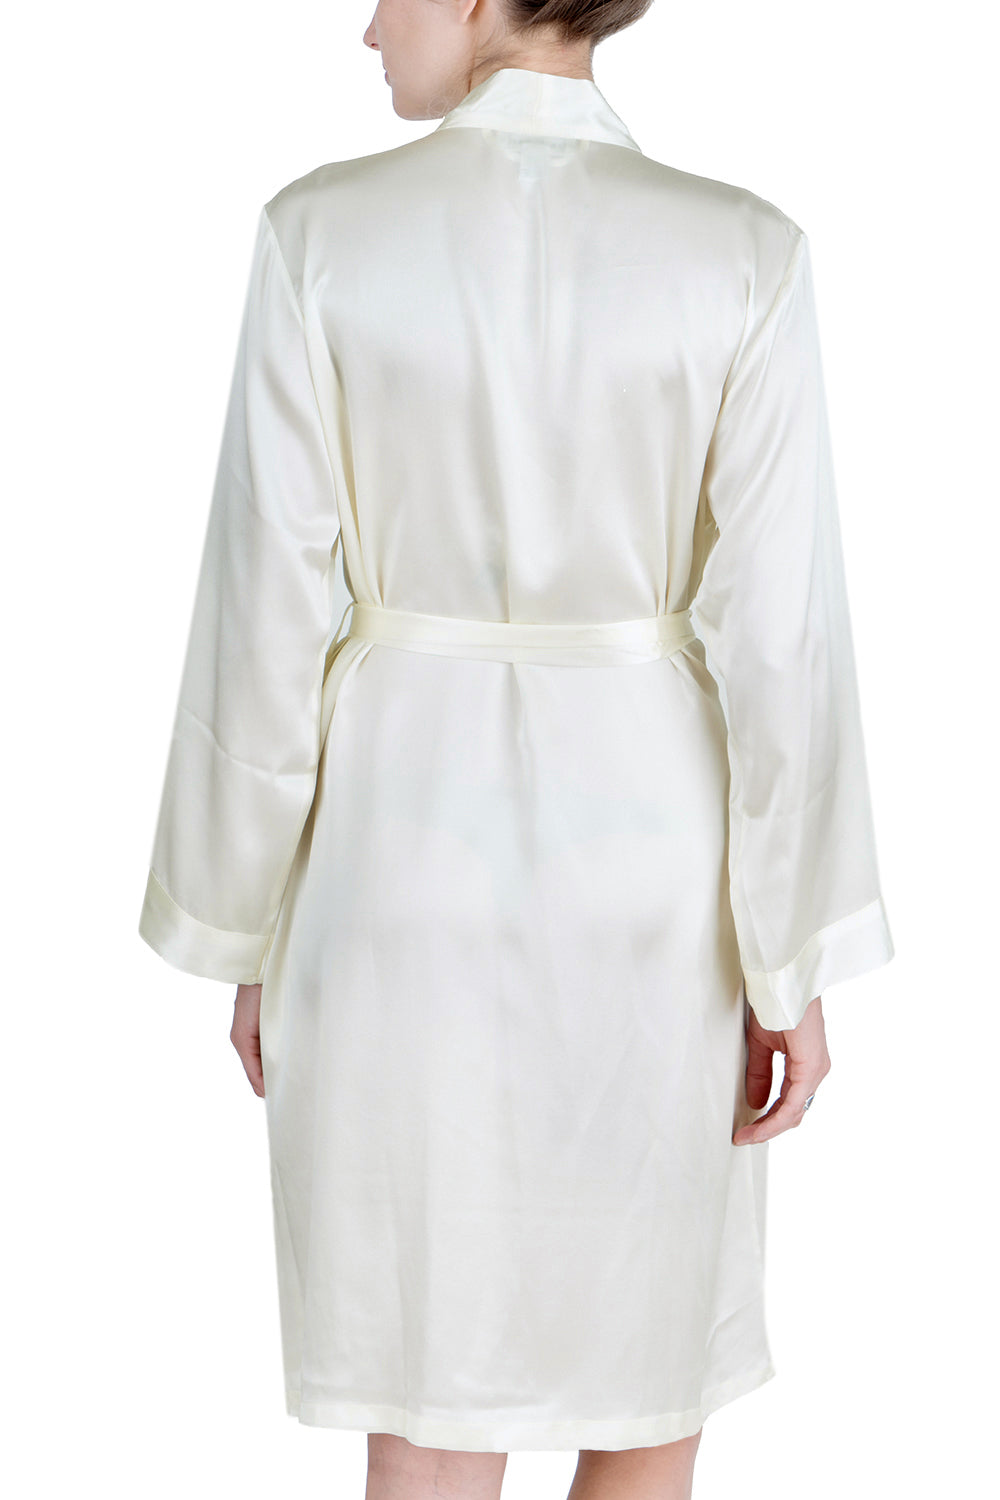 OSCAR ROSSA Women's Silk Sleepwear 100% Silk Charmeuse Long Robe